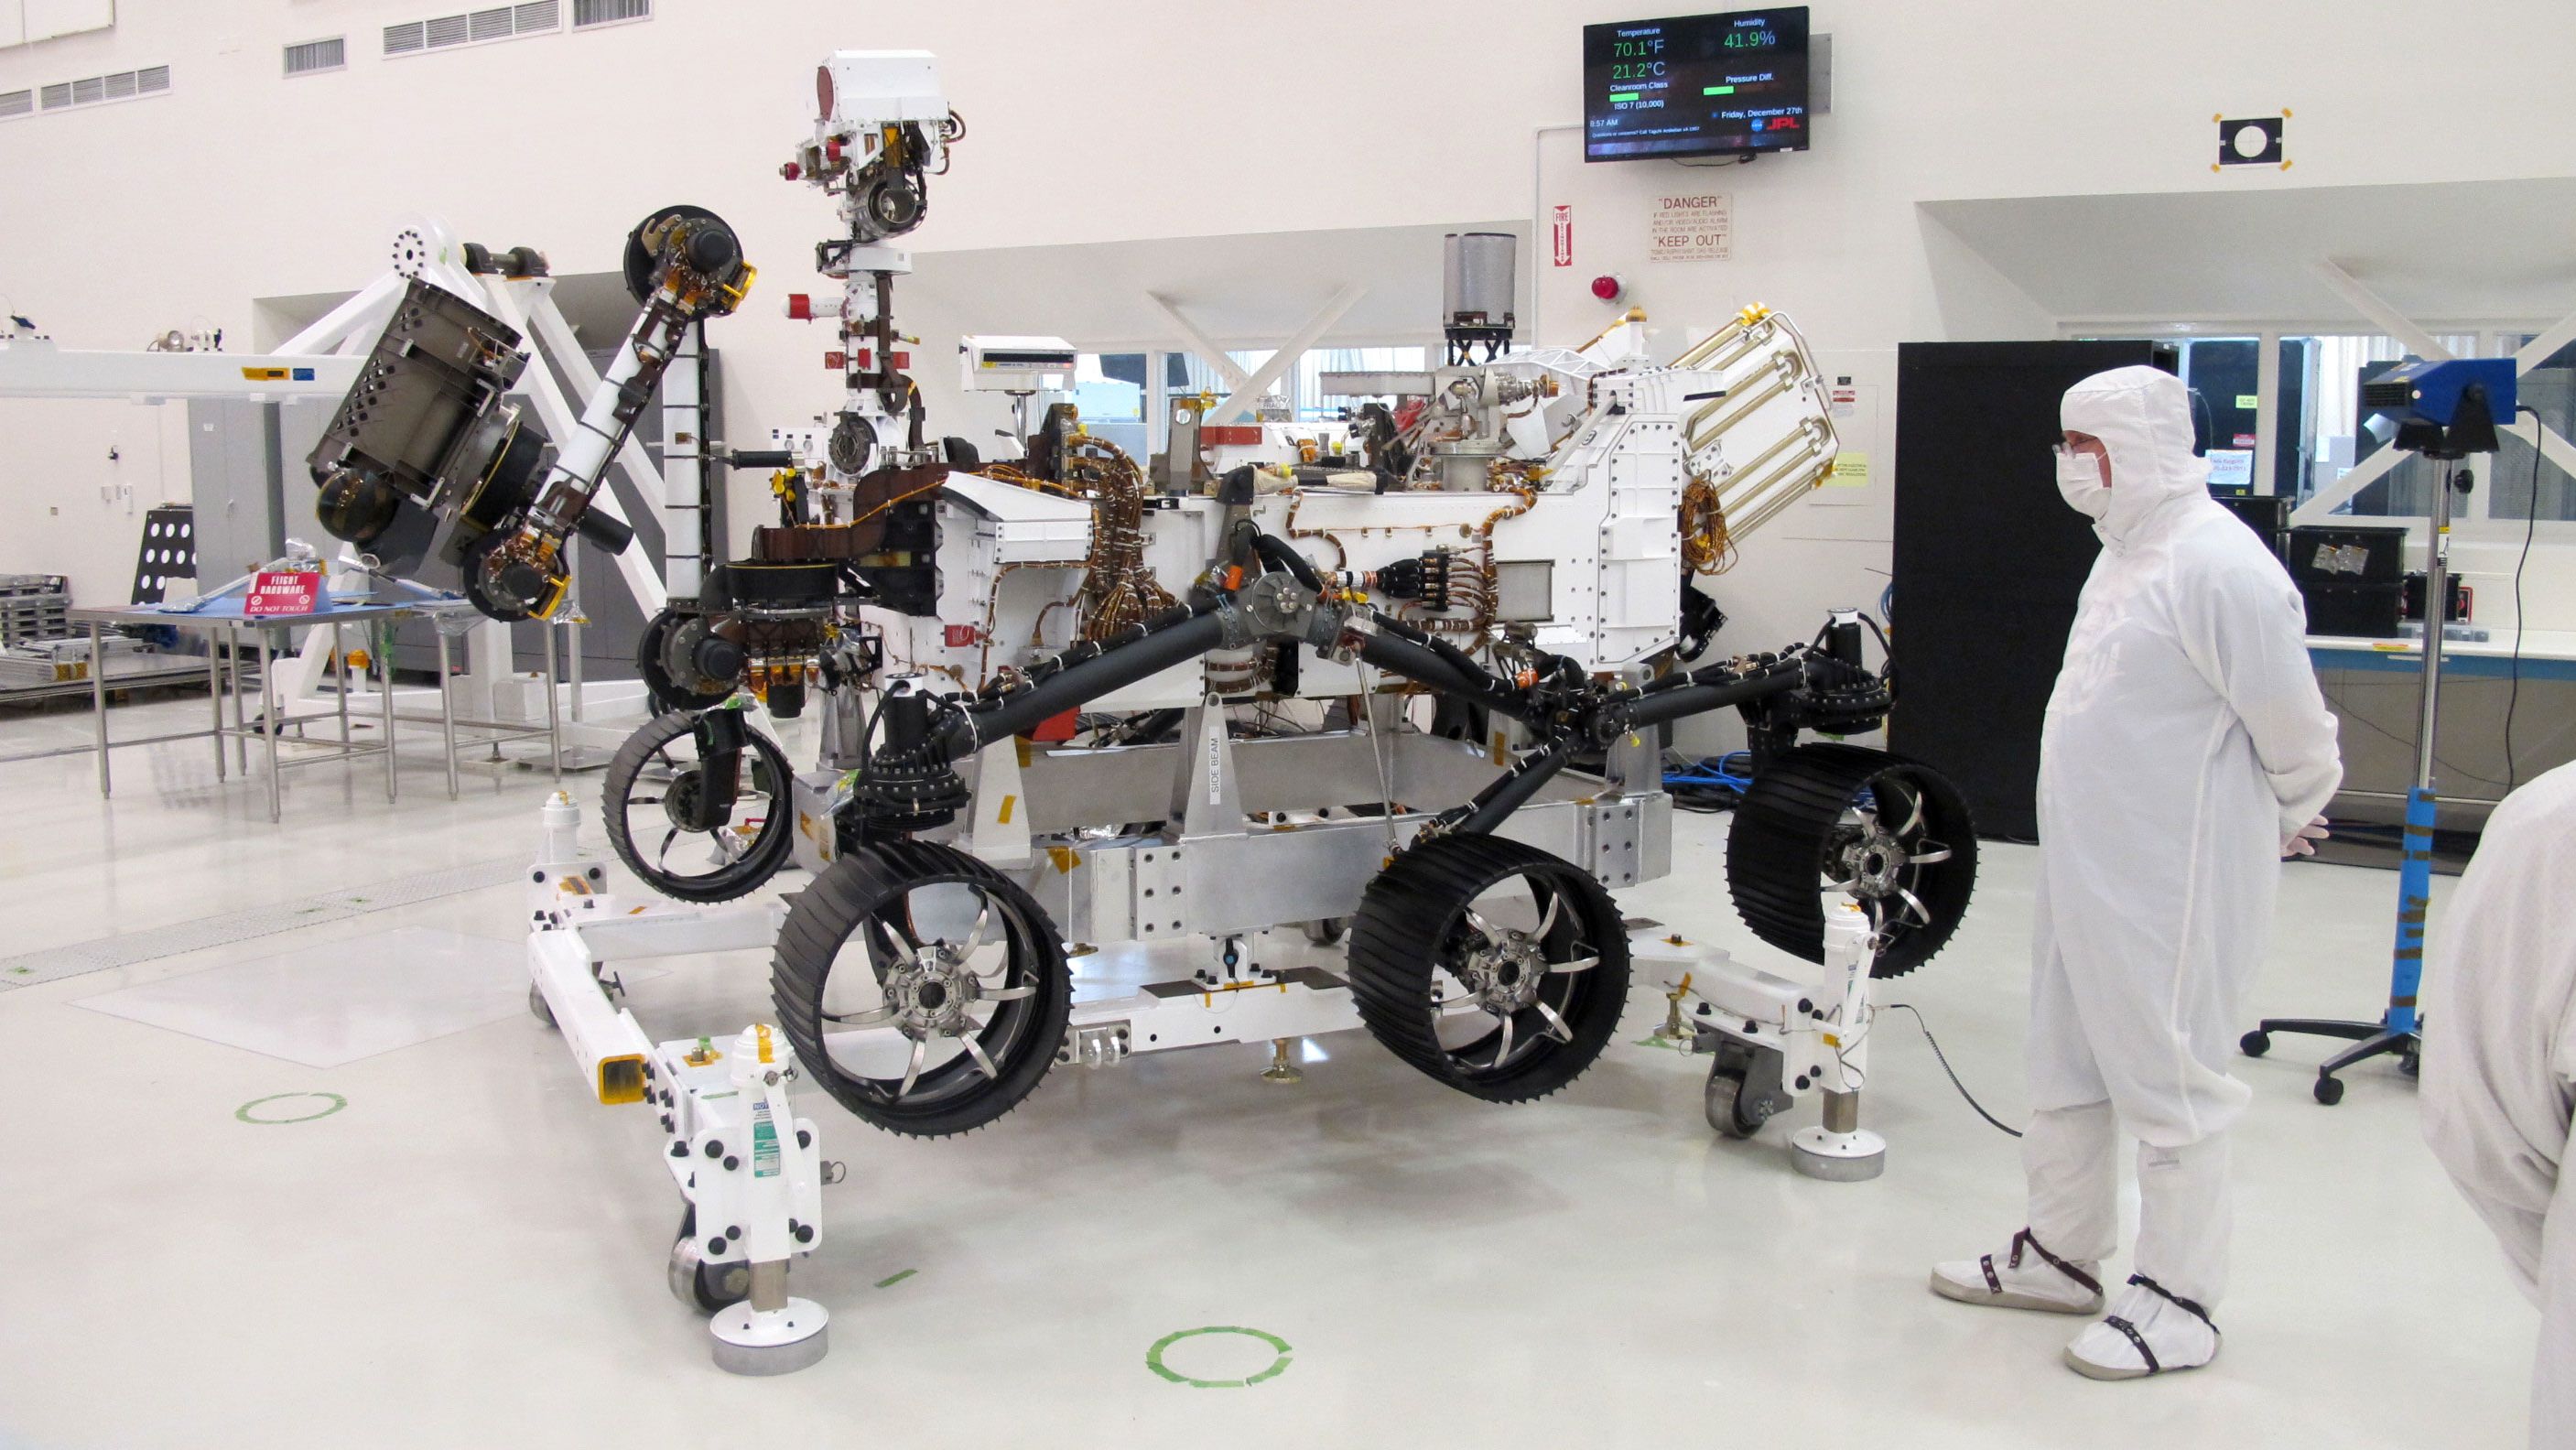 The Mars 2020 rover Friday at the Jet Propulsion Laboratory near Los Angeles.